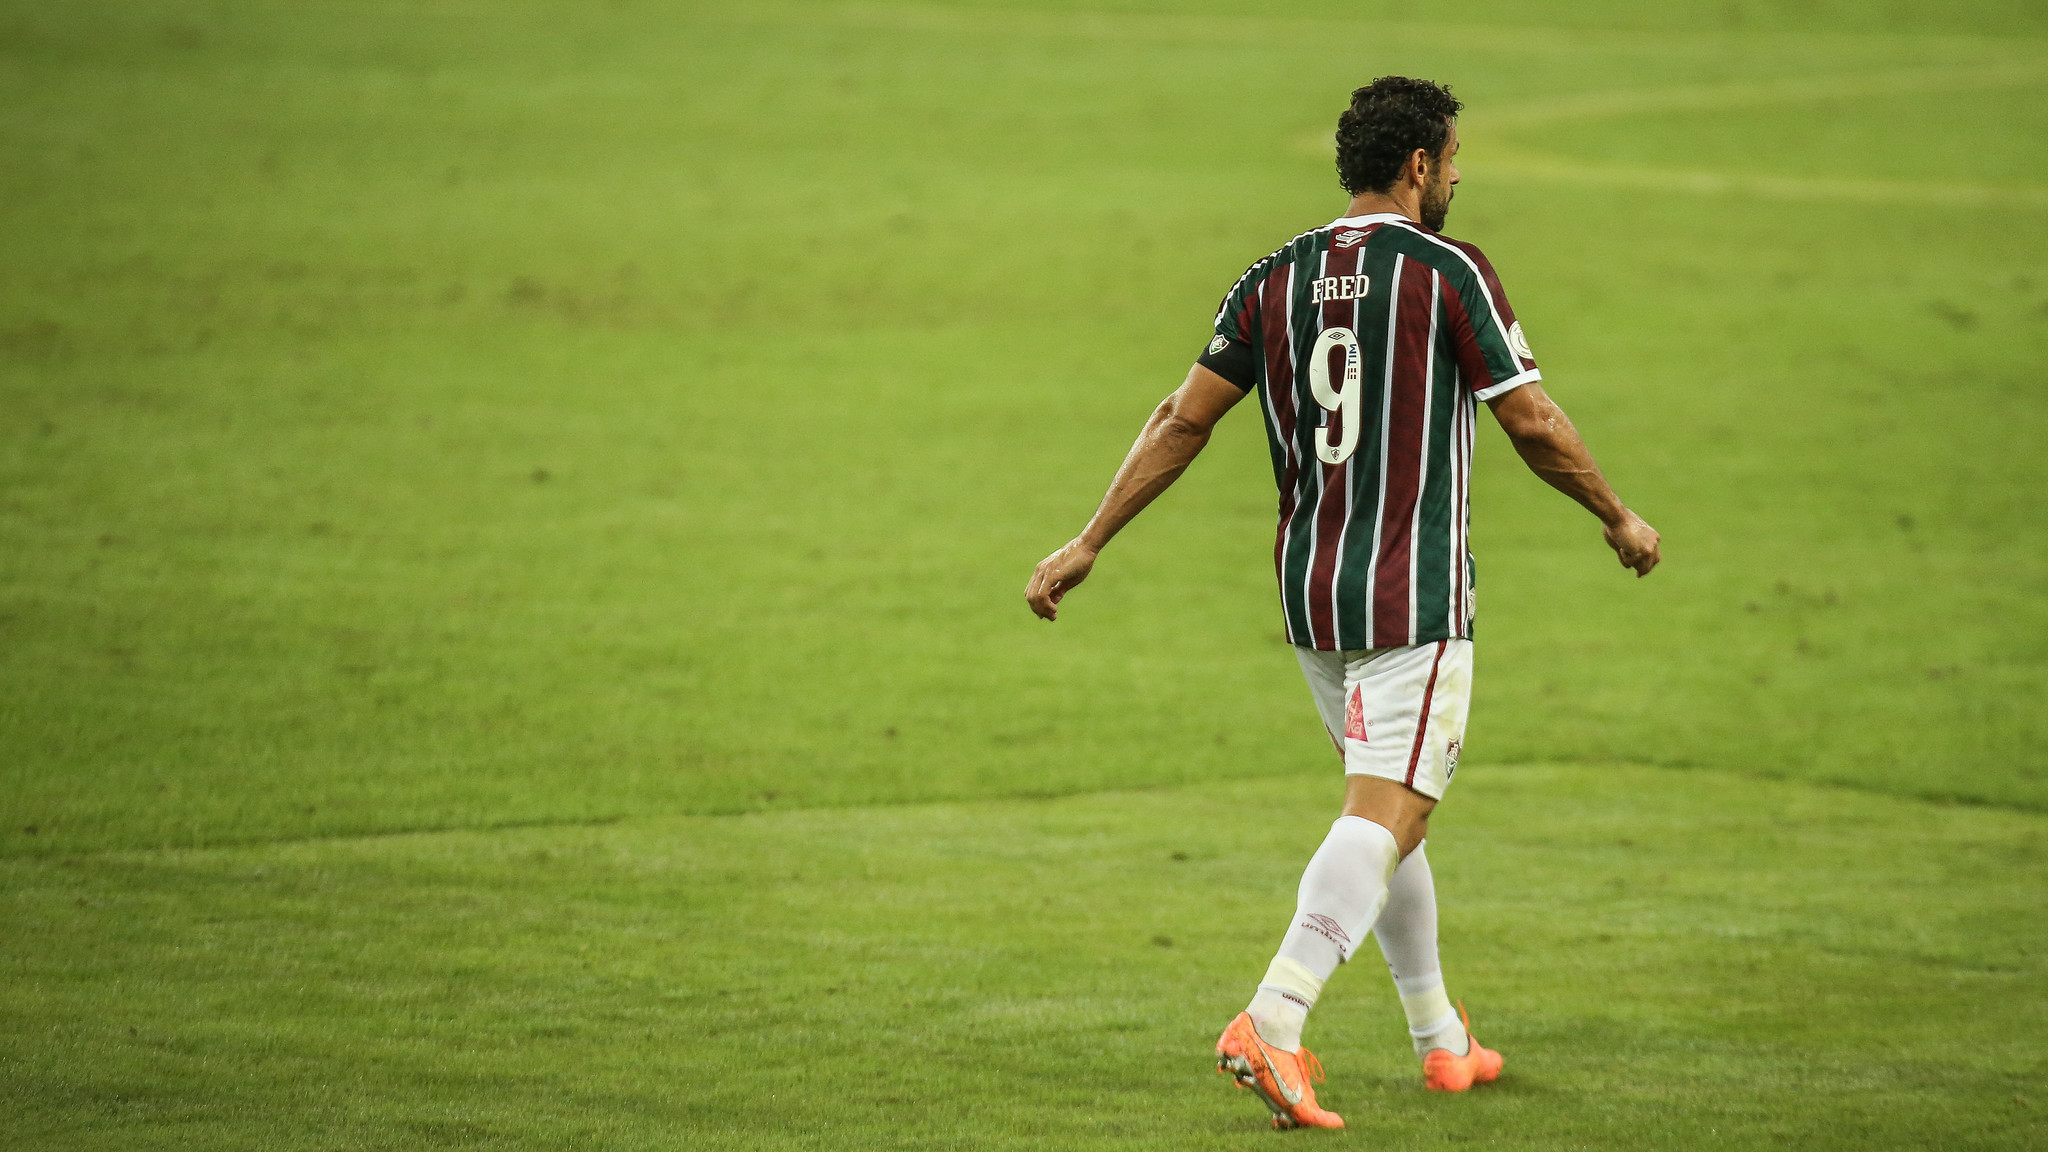 Fred-Fluminense-Lucas-Merçon-FFC